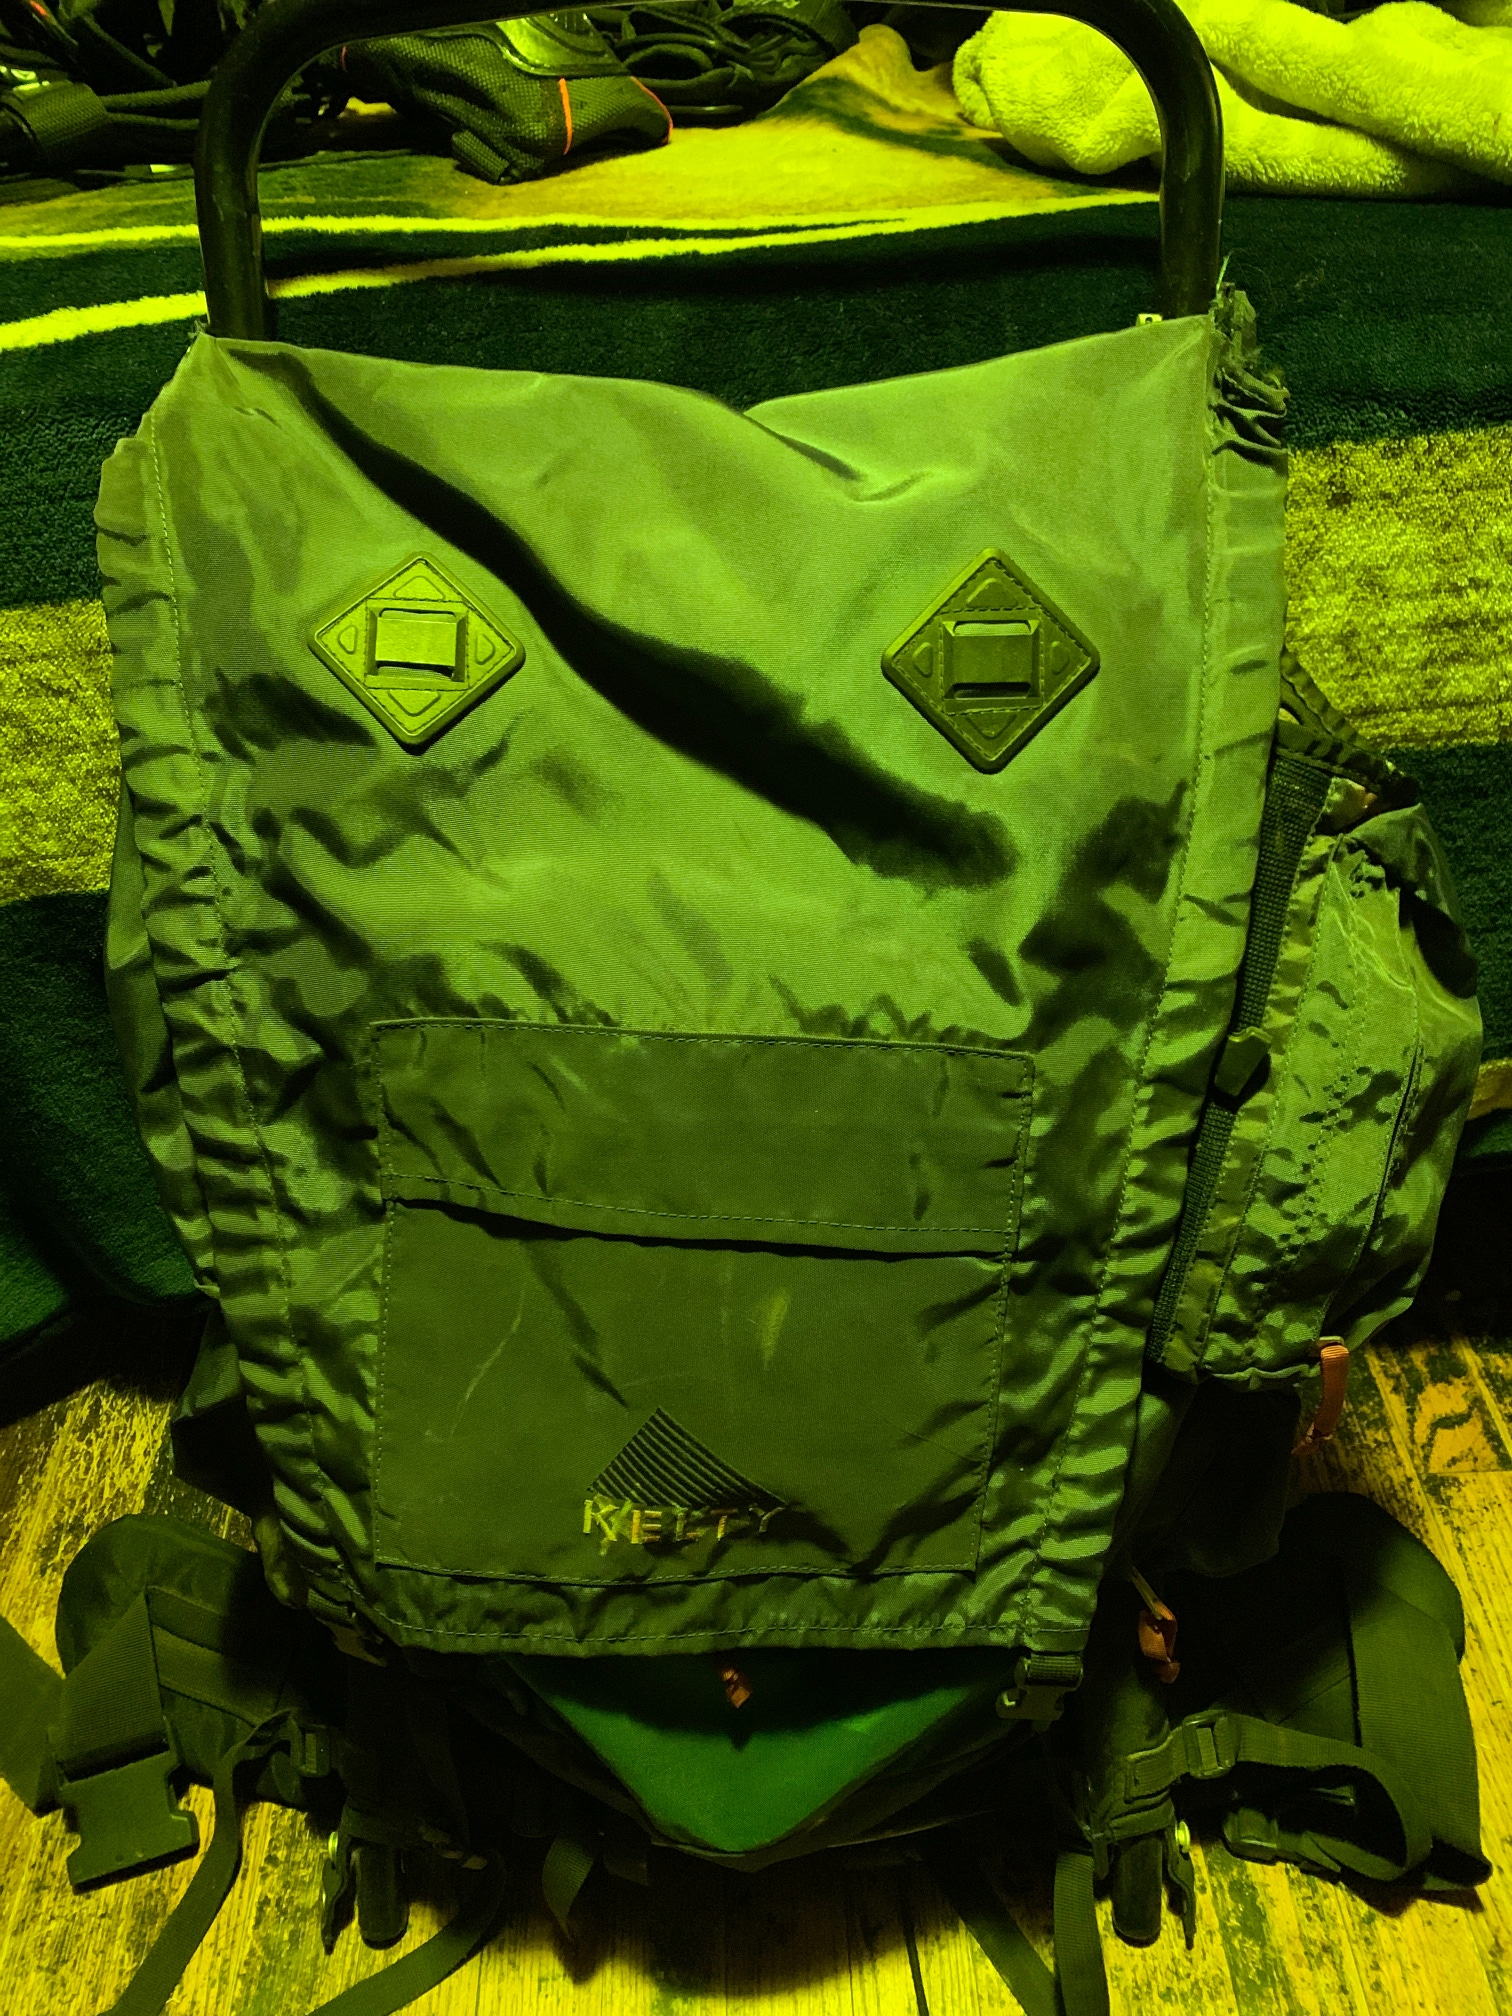 Used Kelty ( External Frame) Backpack